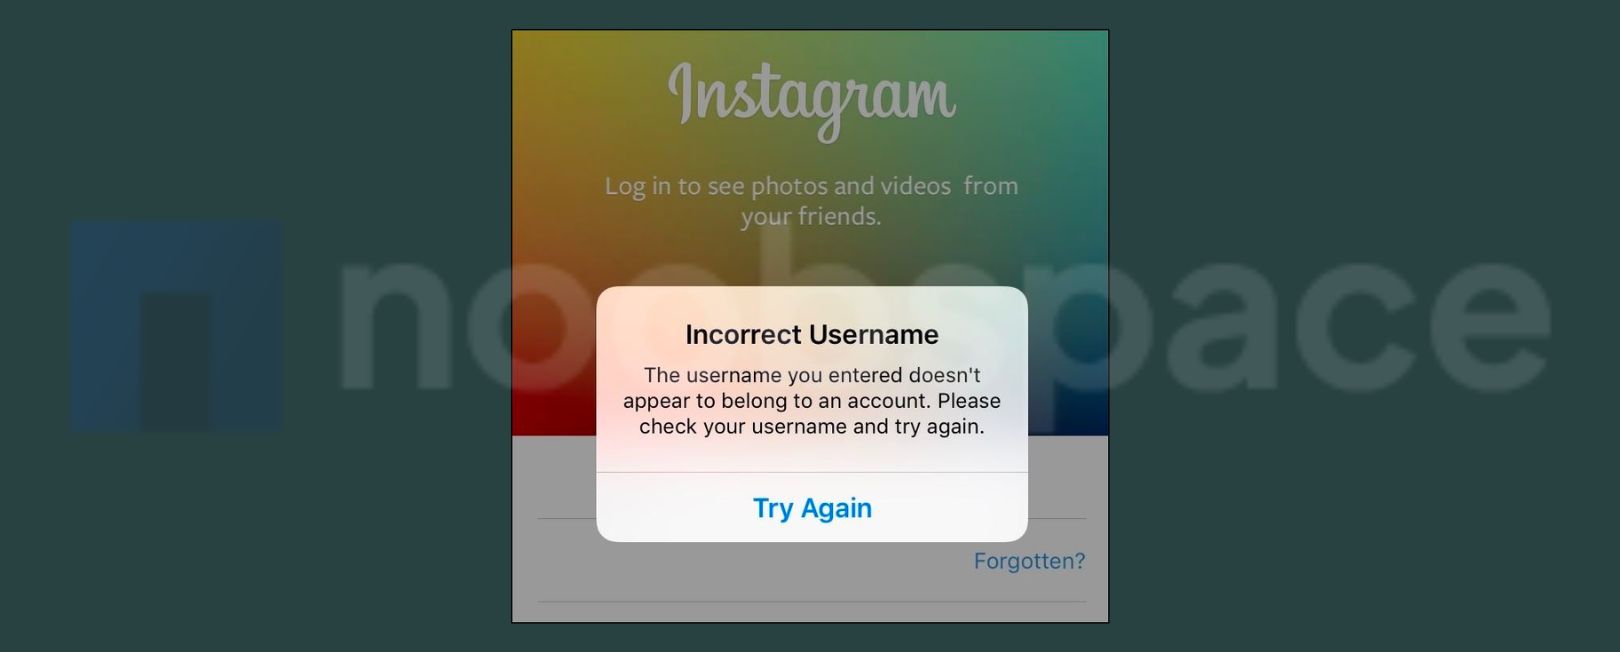 incorrect username instagram error pop up 2024